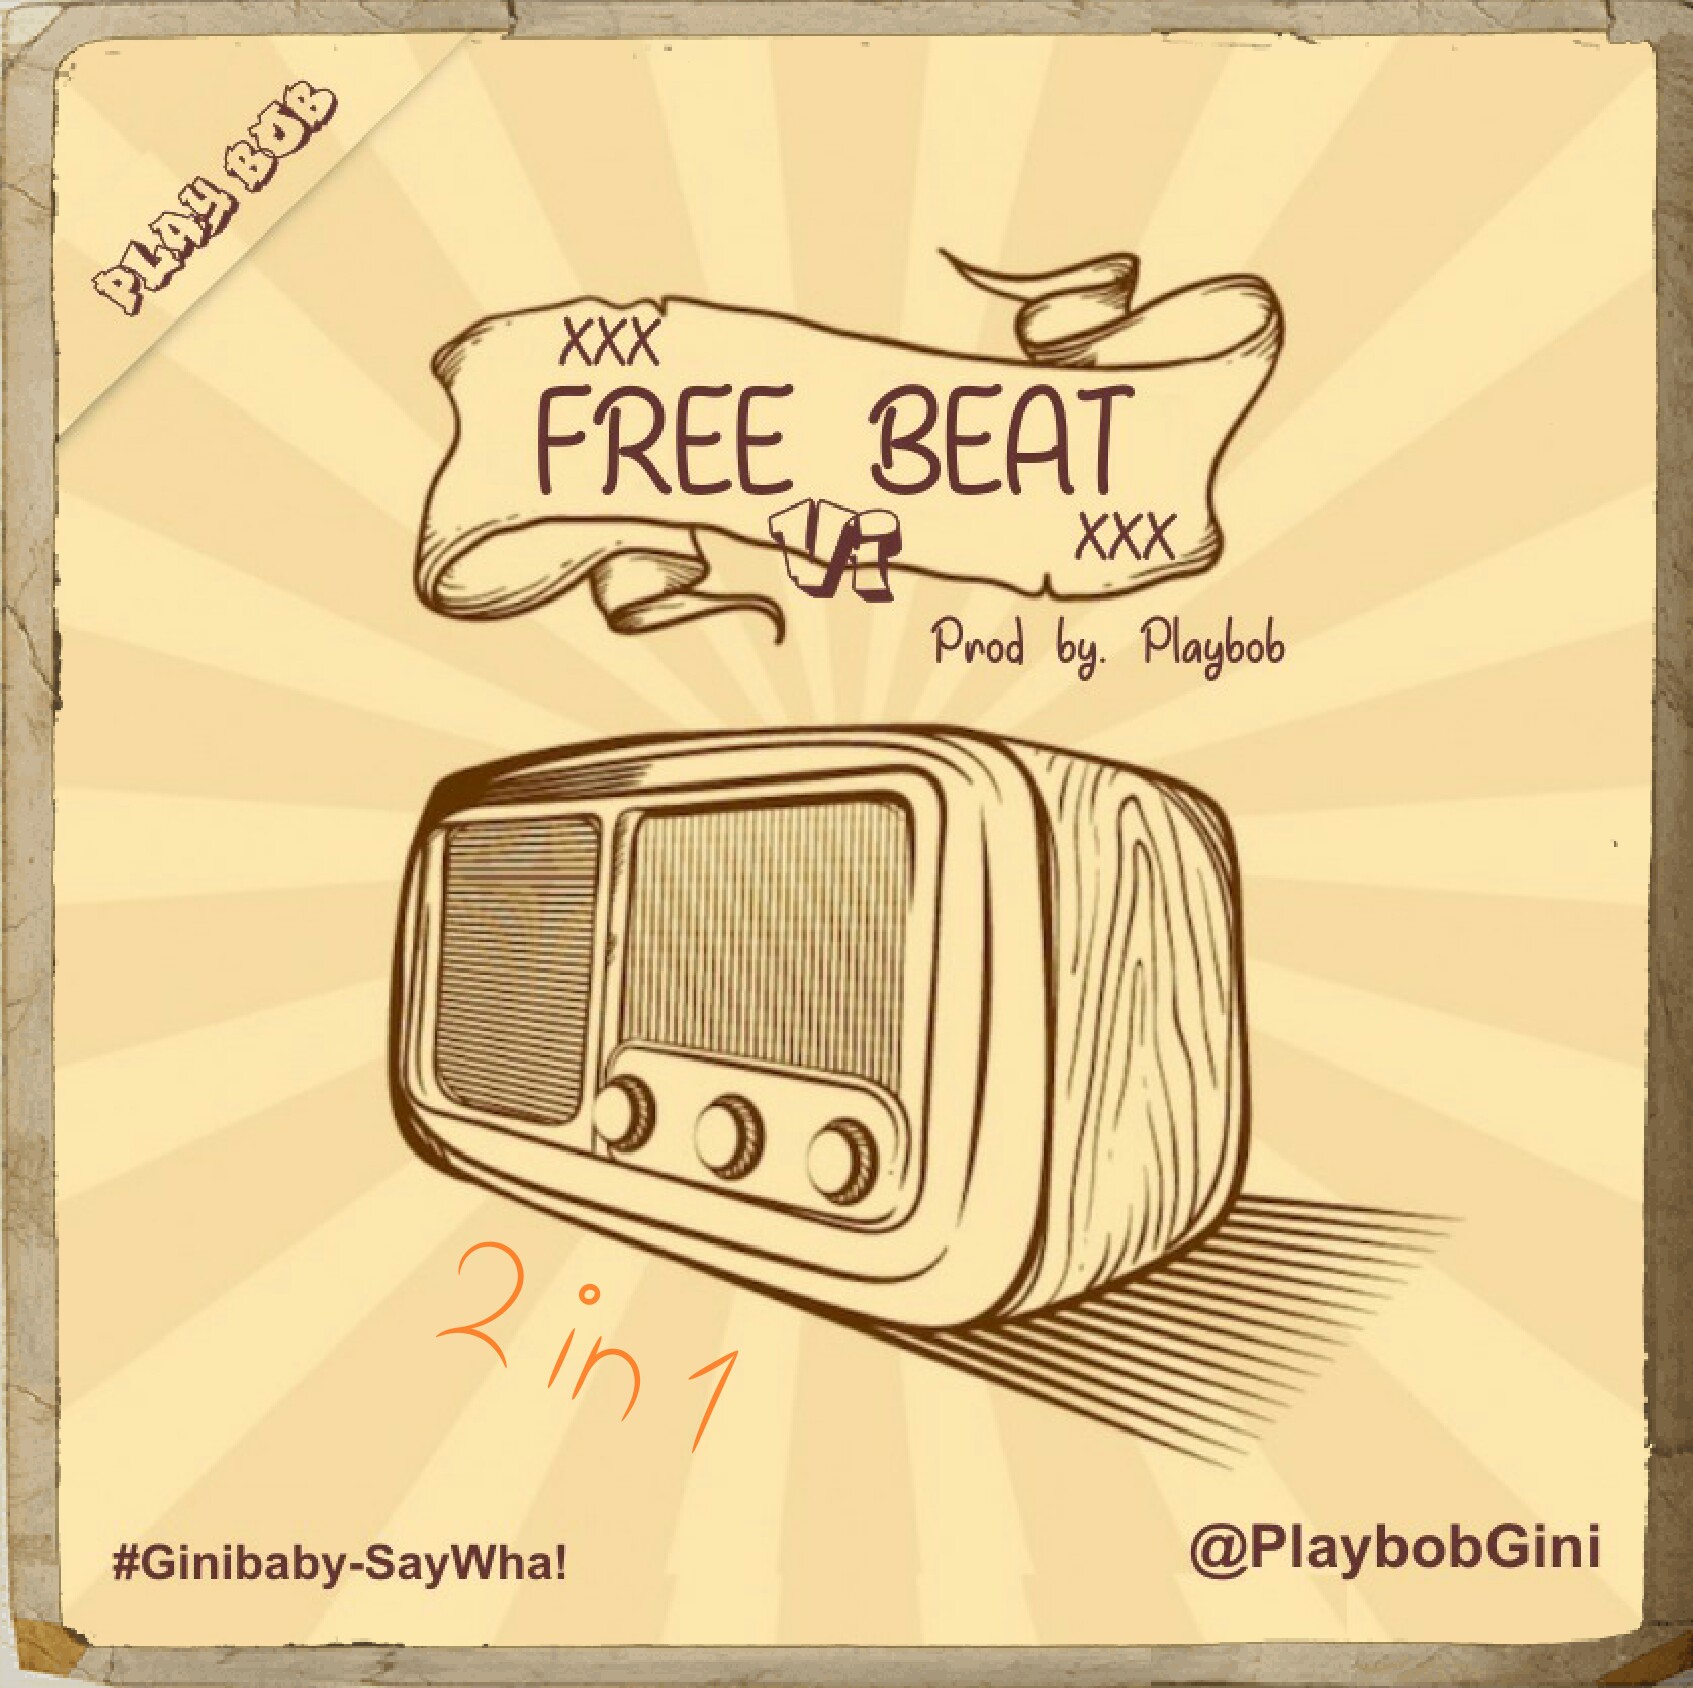 Playbob (@PlaybobGini) drops Free Beat VI (2 in 1)